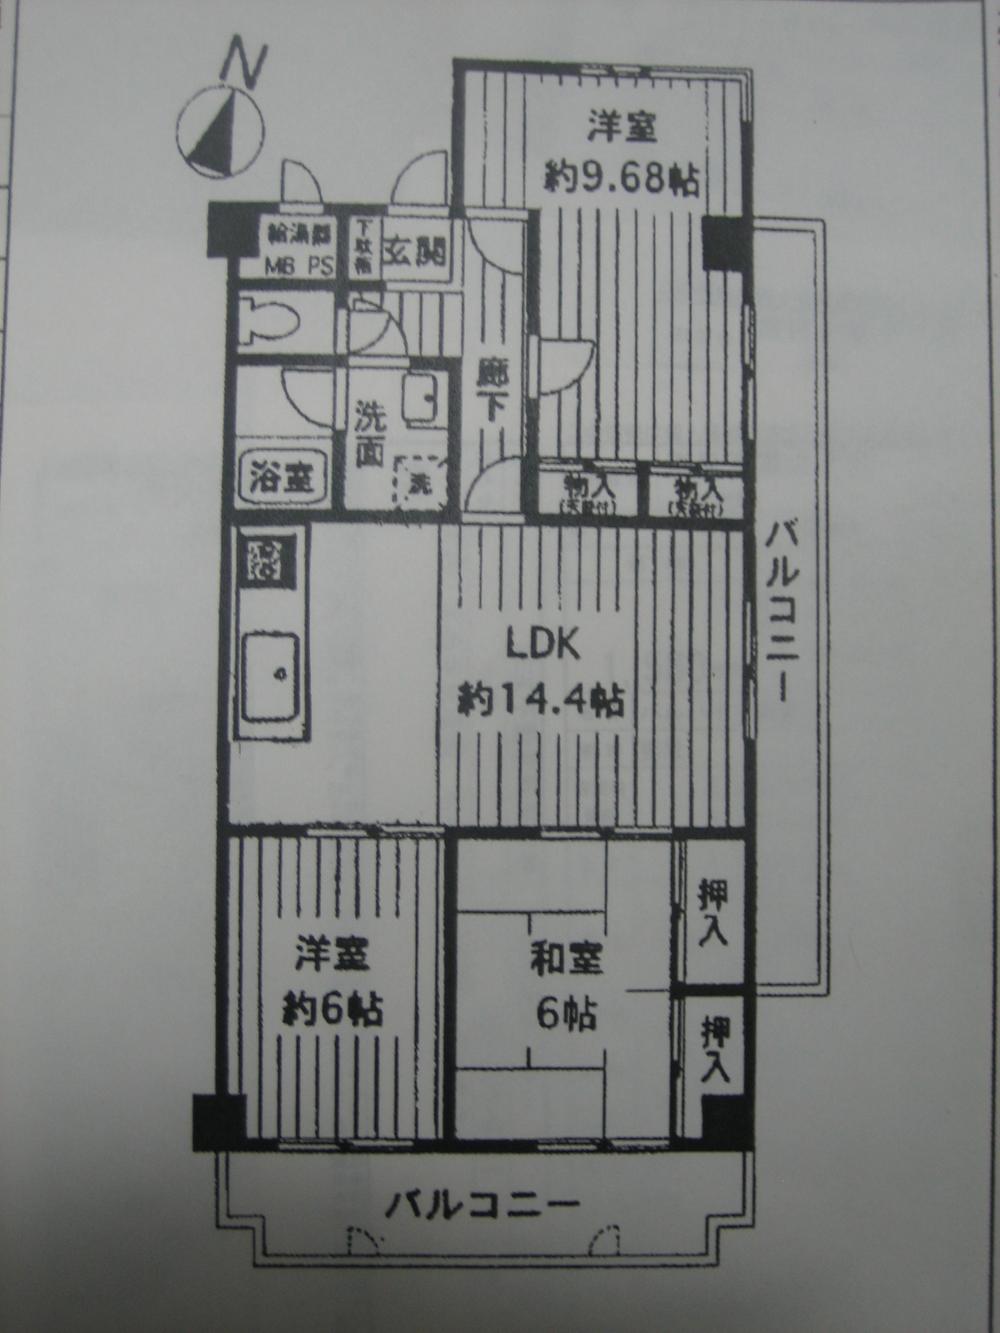 Floor plan. 4LDK, Price 13.8 million yen, Footprint 77.6 sq m , Balcony area 19.05 sq m